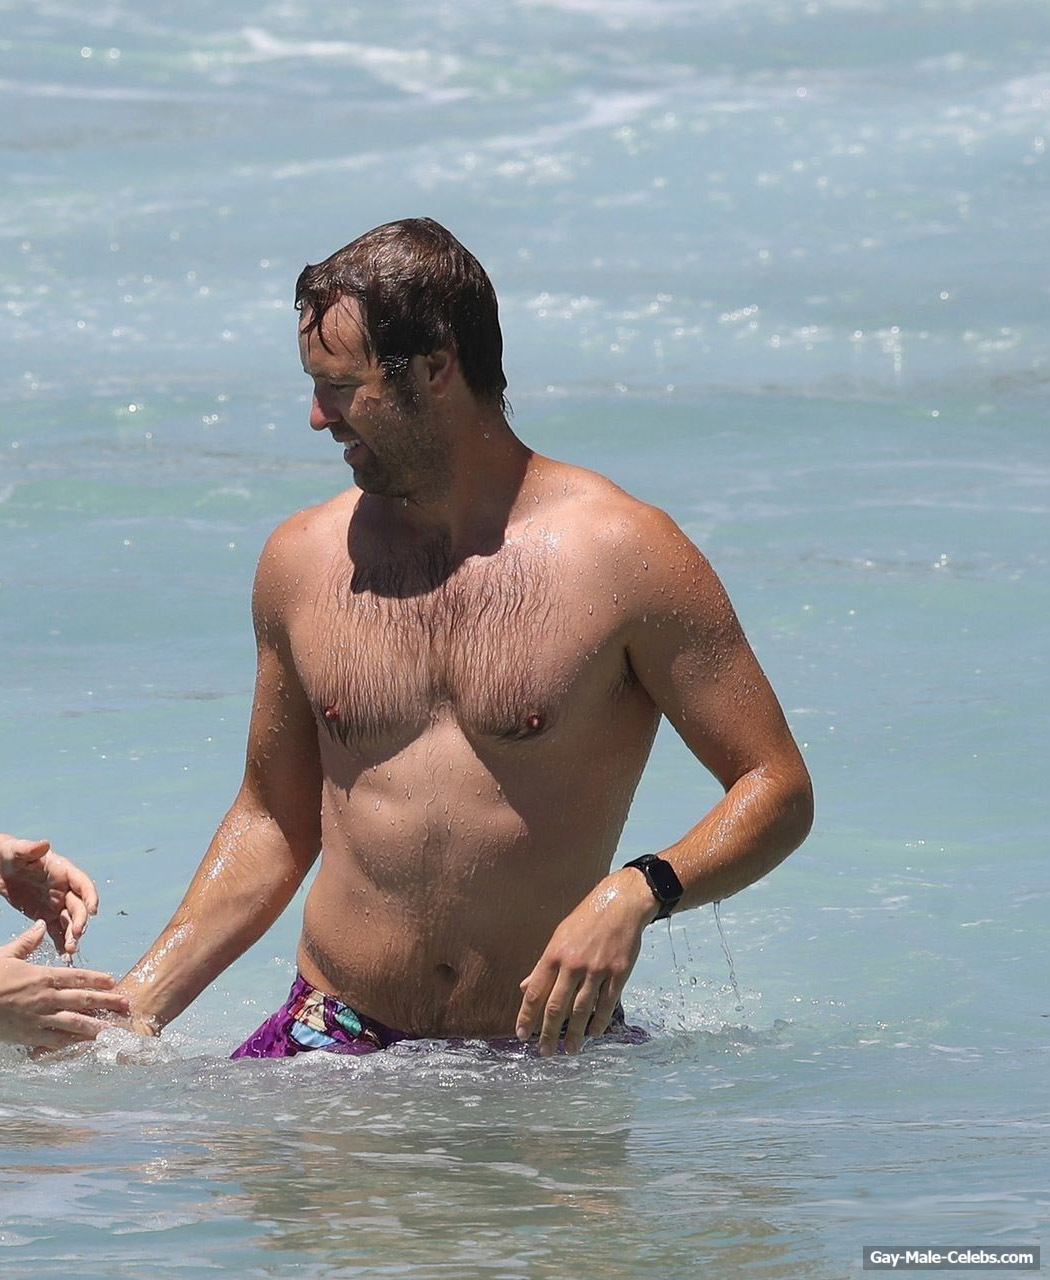 Danny Clayton Sunbathing Shirtless On A Beach